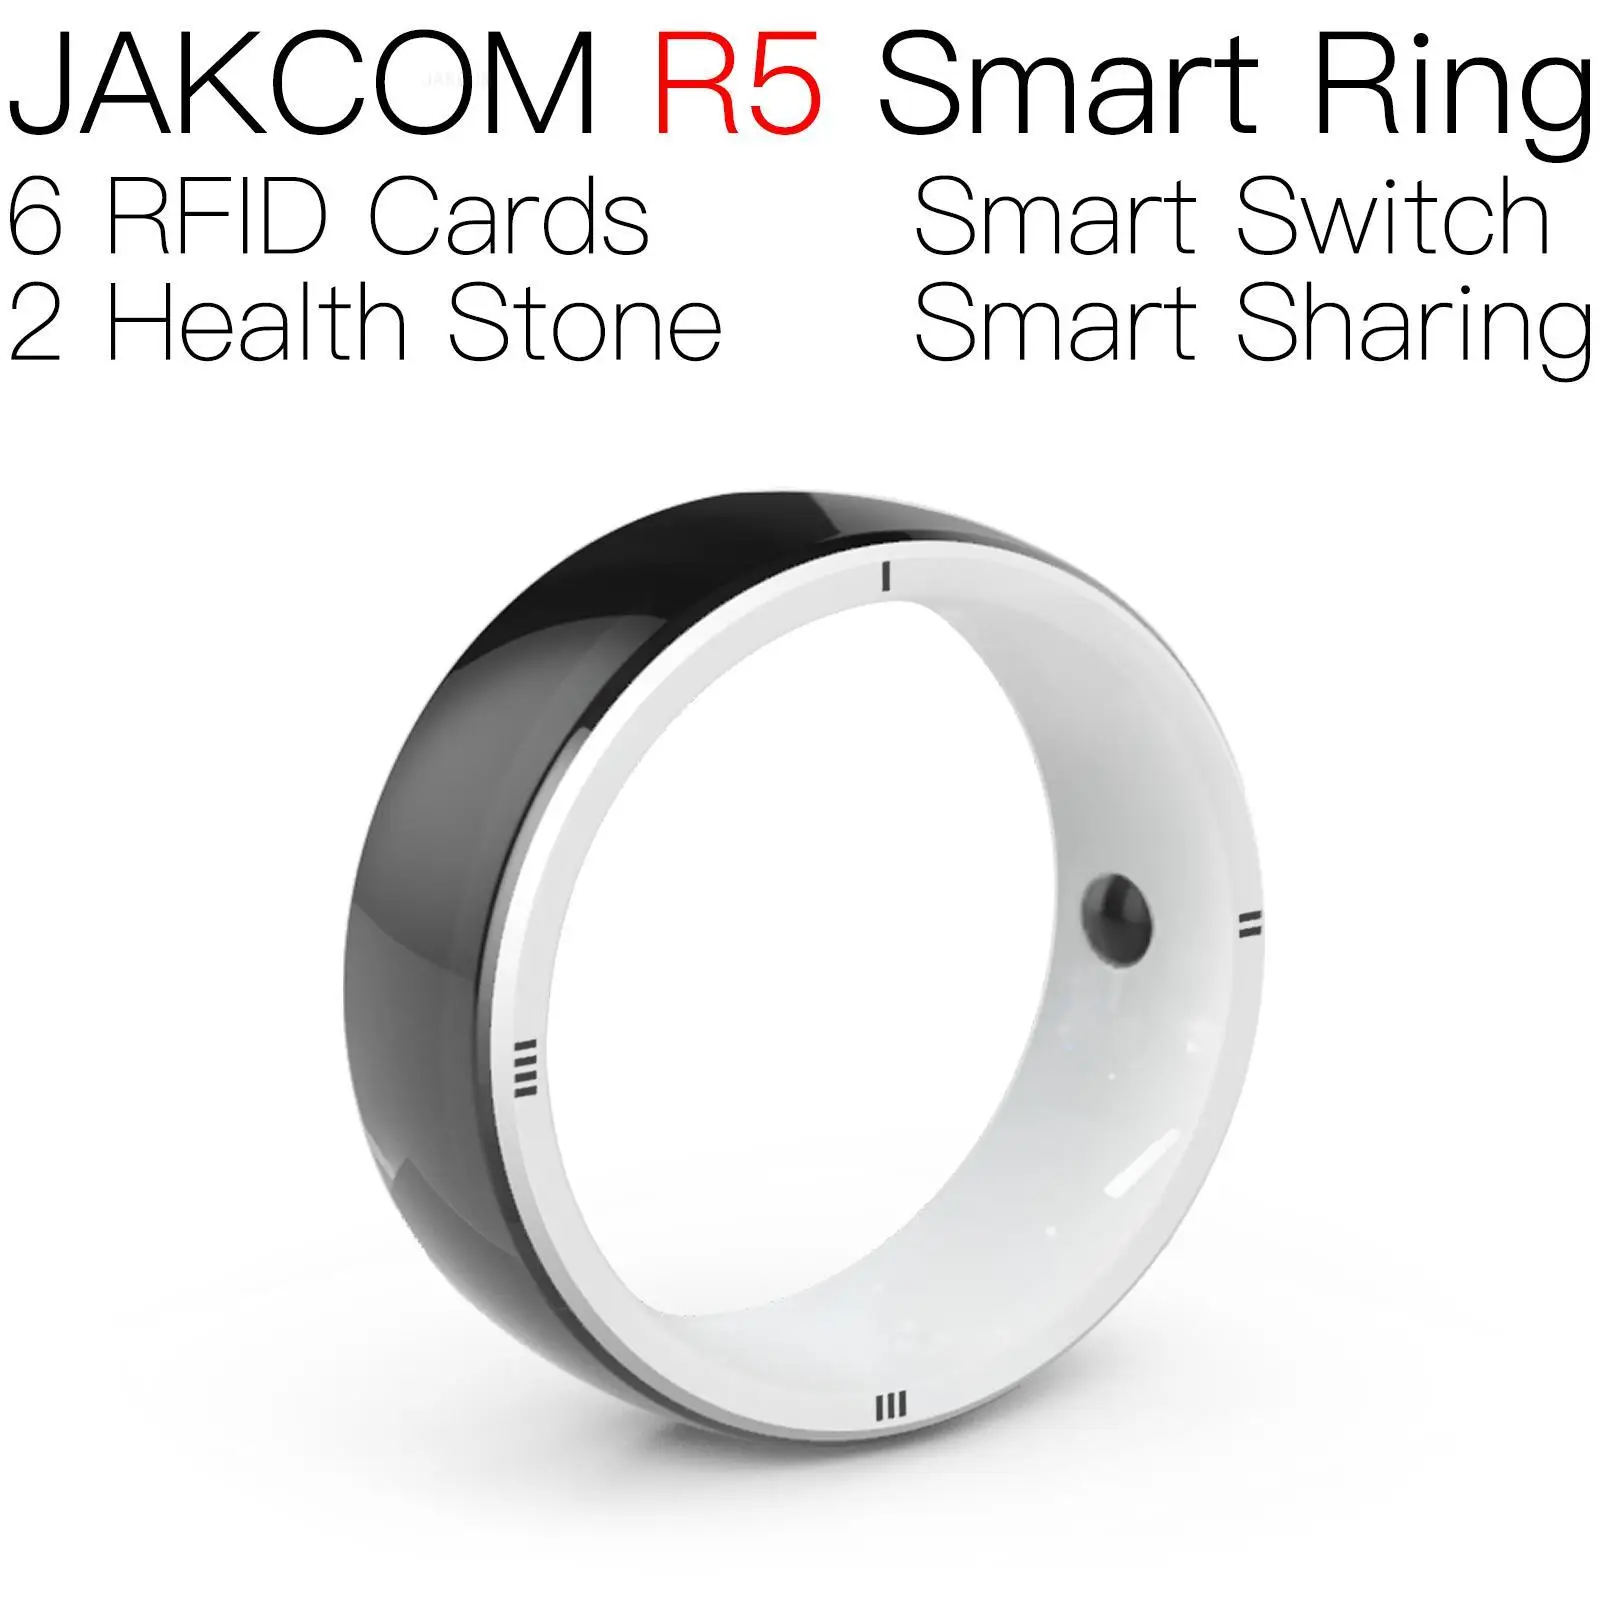 

JAKCOM R5 Smart Ring For men women ic finder rfid chips keyfob camera horse microchip scanner blank nfc card tag black square